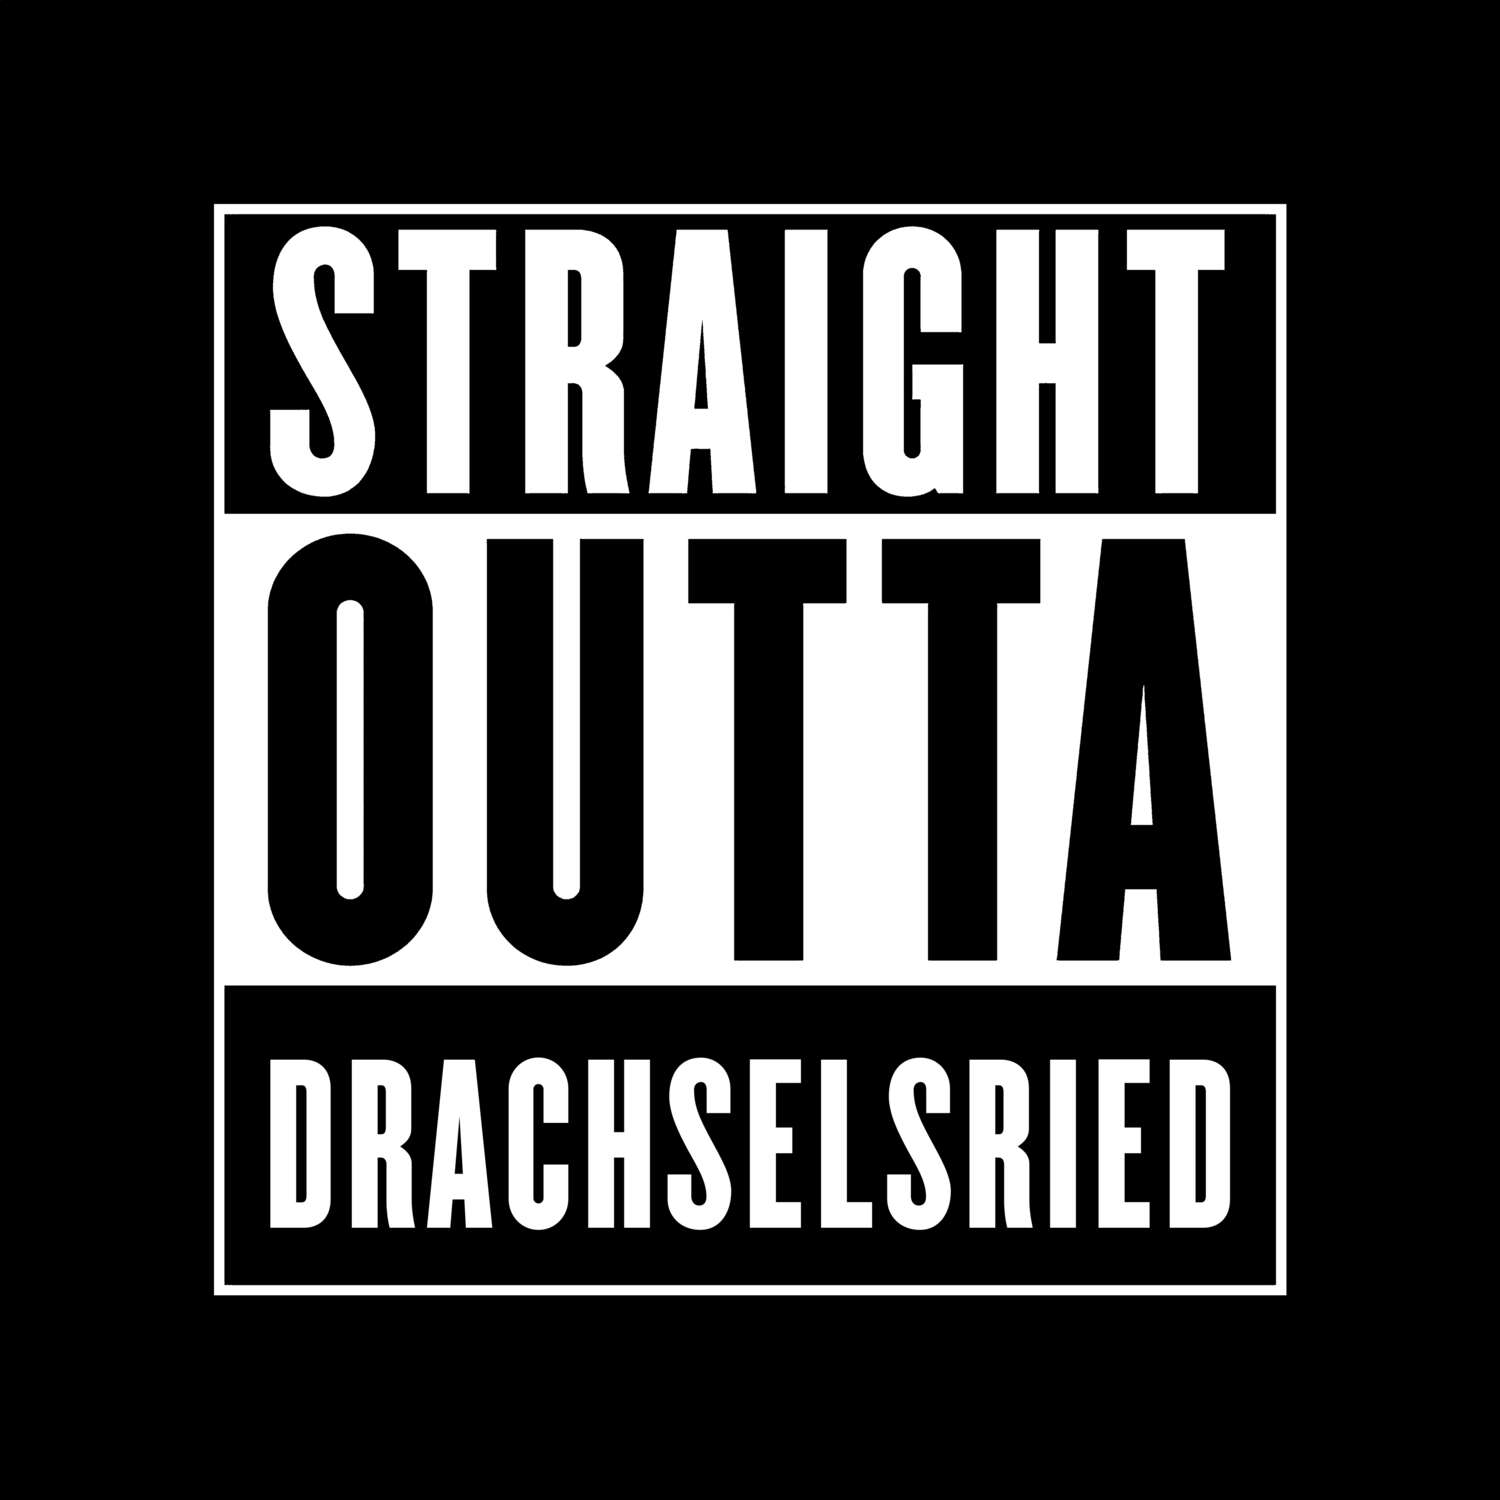 Drachselsried T-Shirt »Straight Outta«